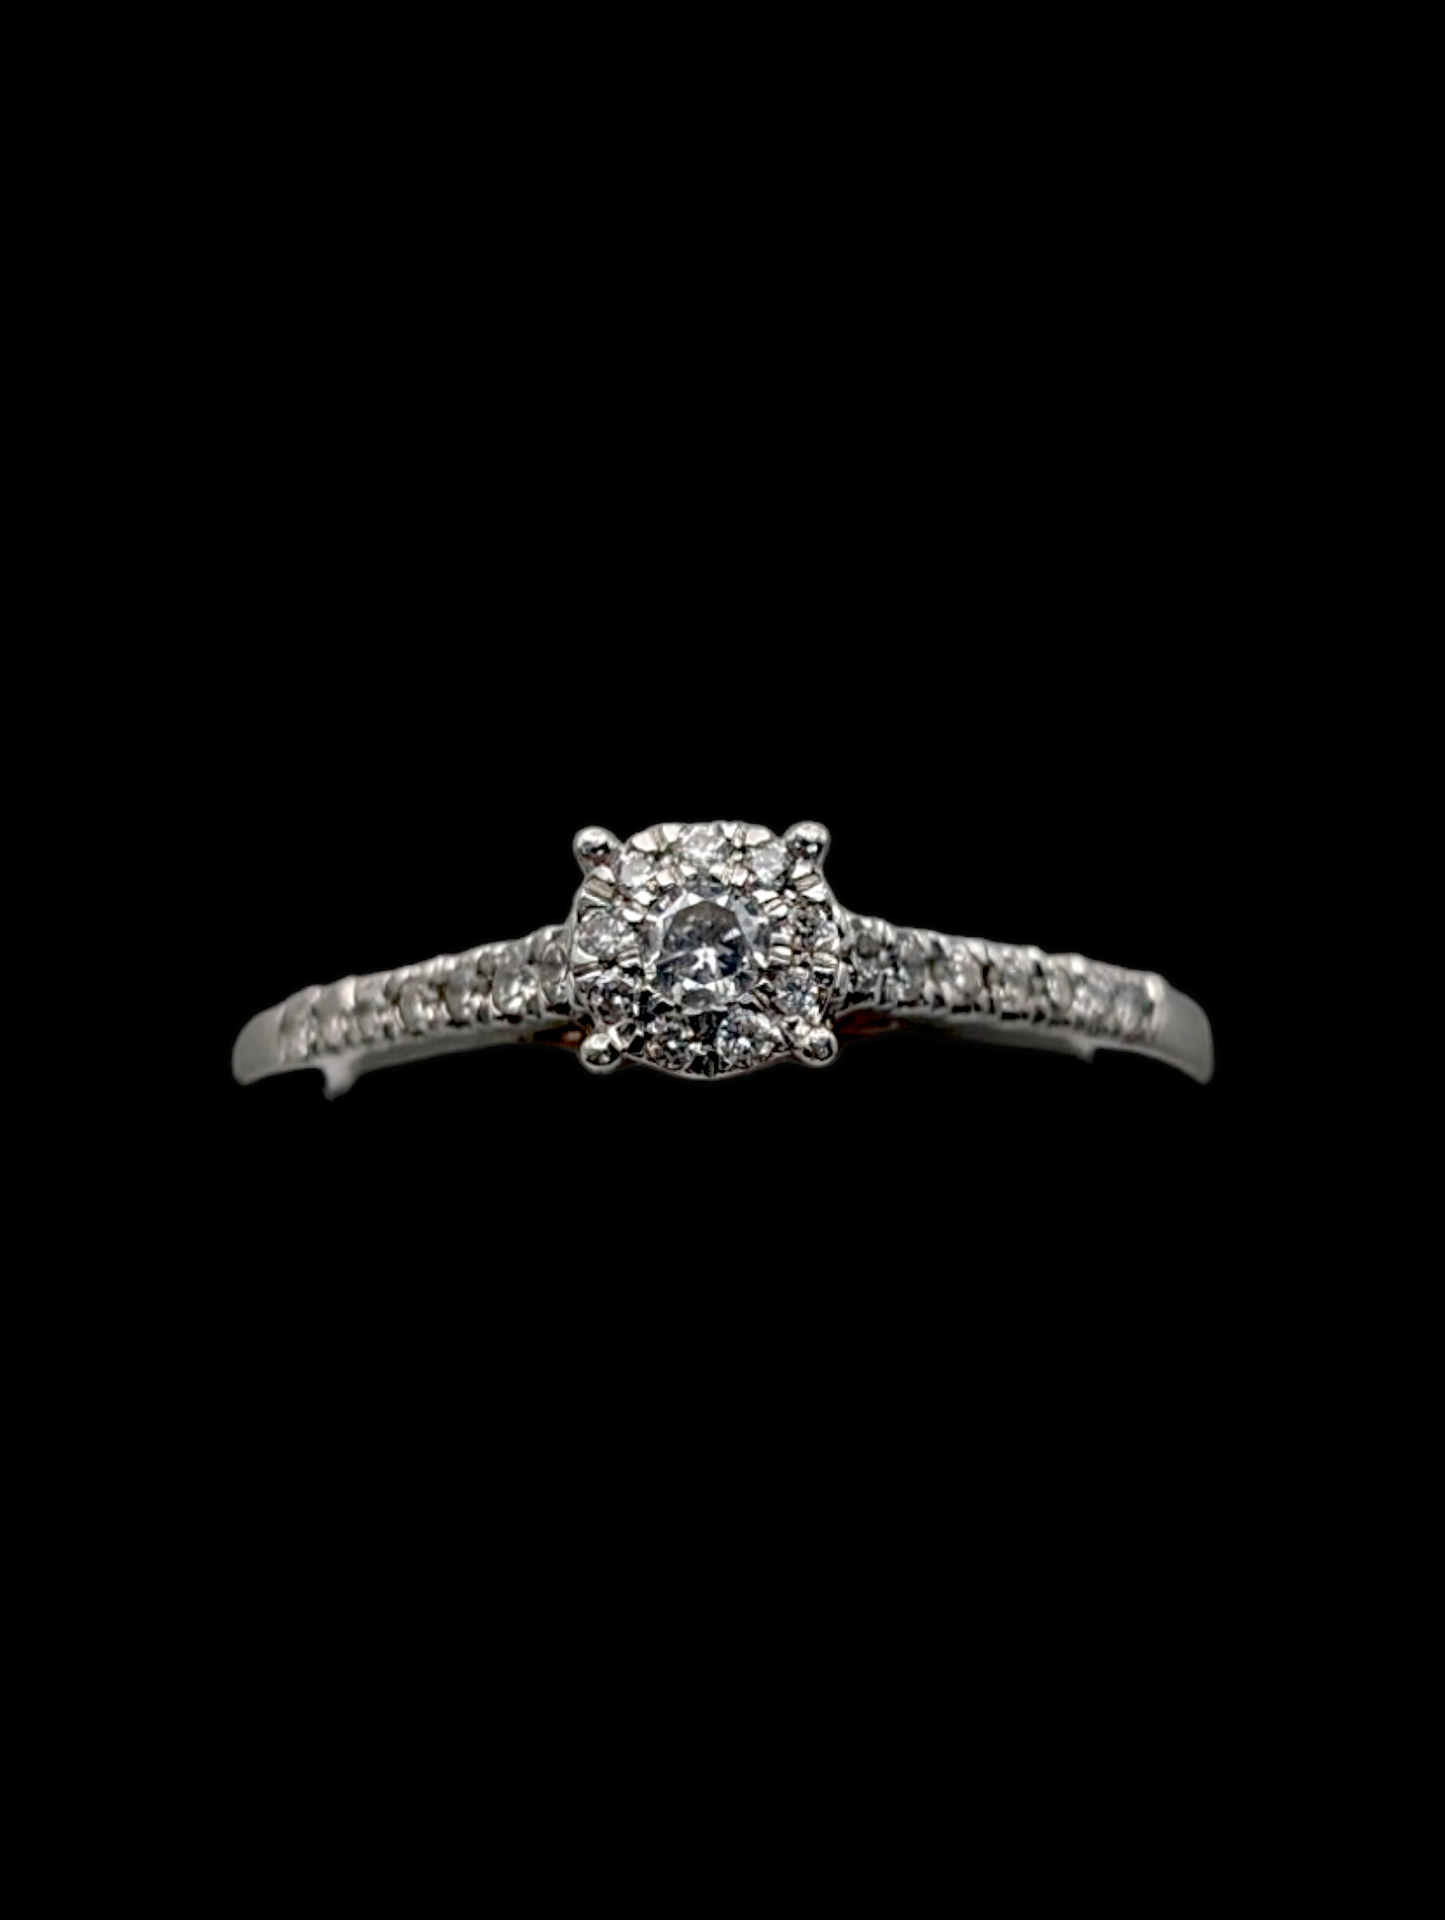 RARE Discontinued Disney Enchanted Diamond 10k Gold Ring with Rose Gold Ribbon